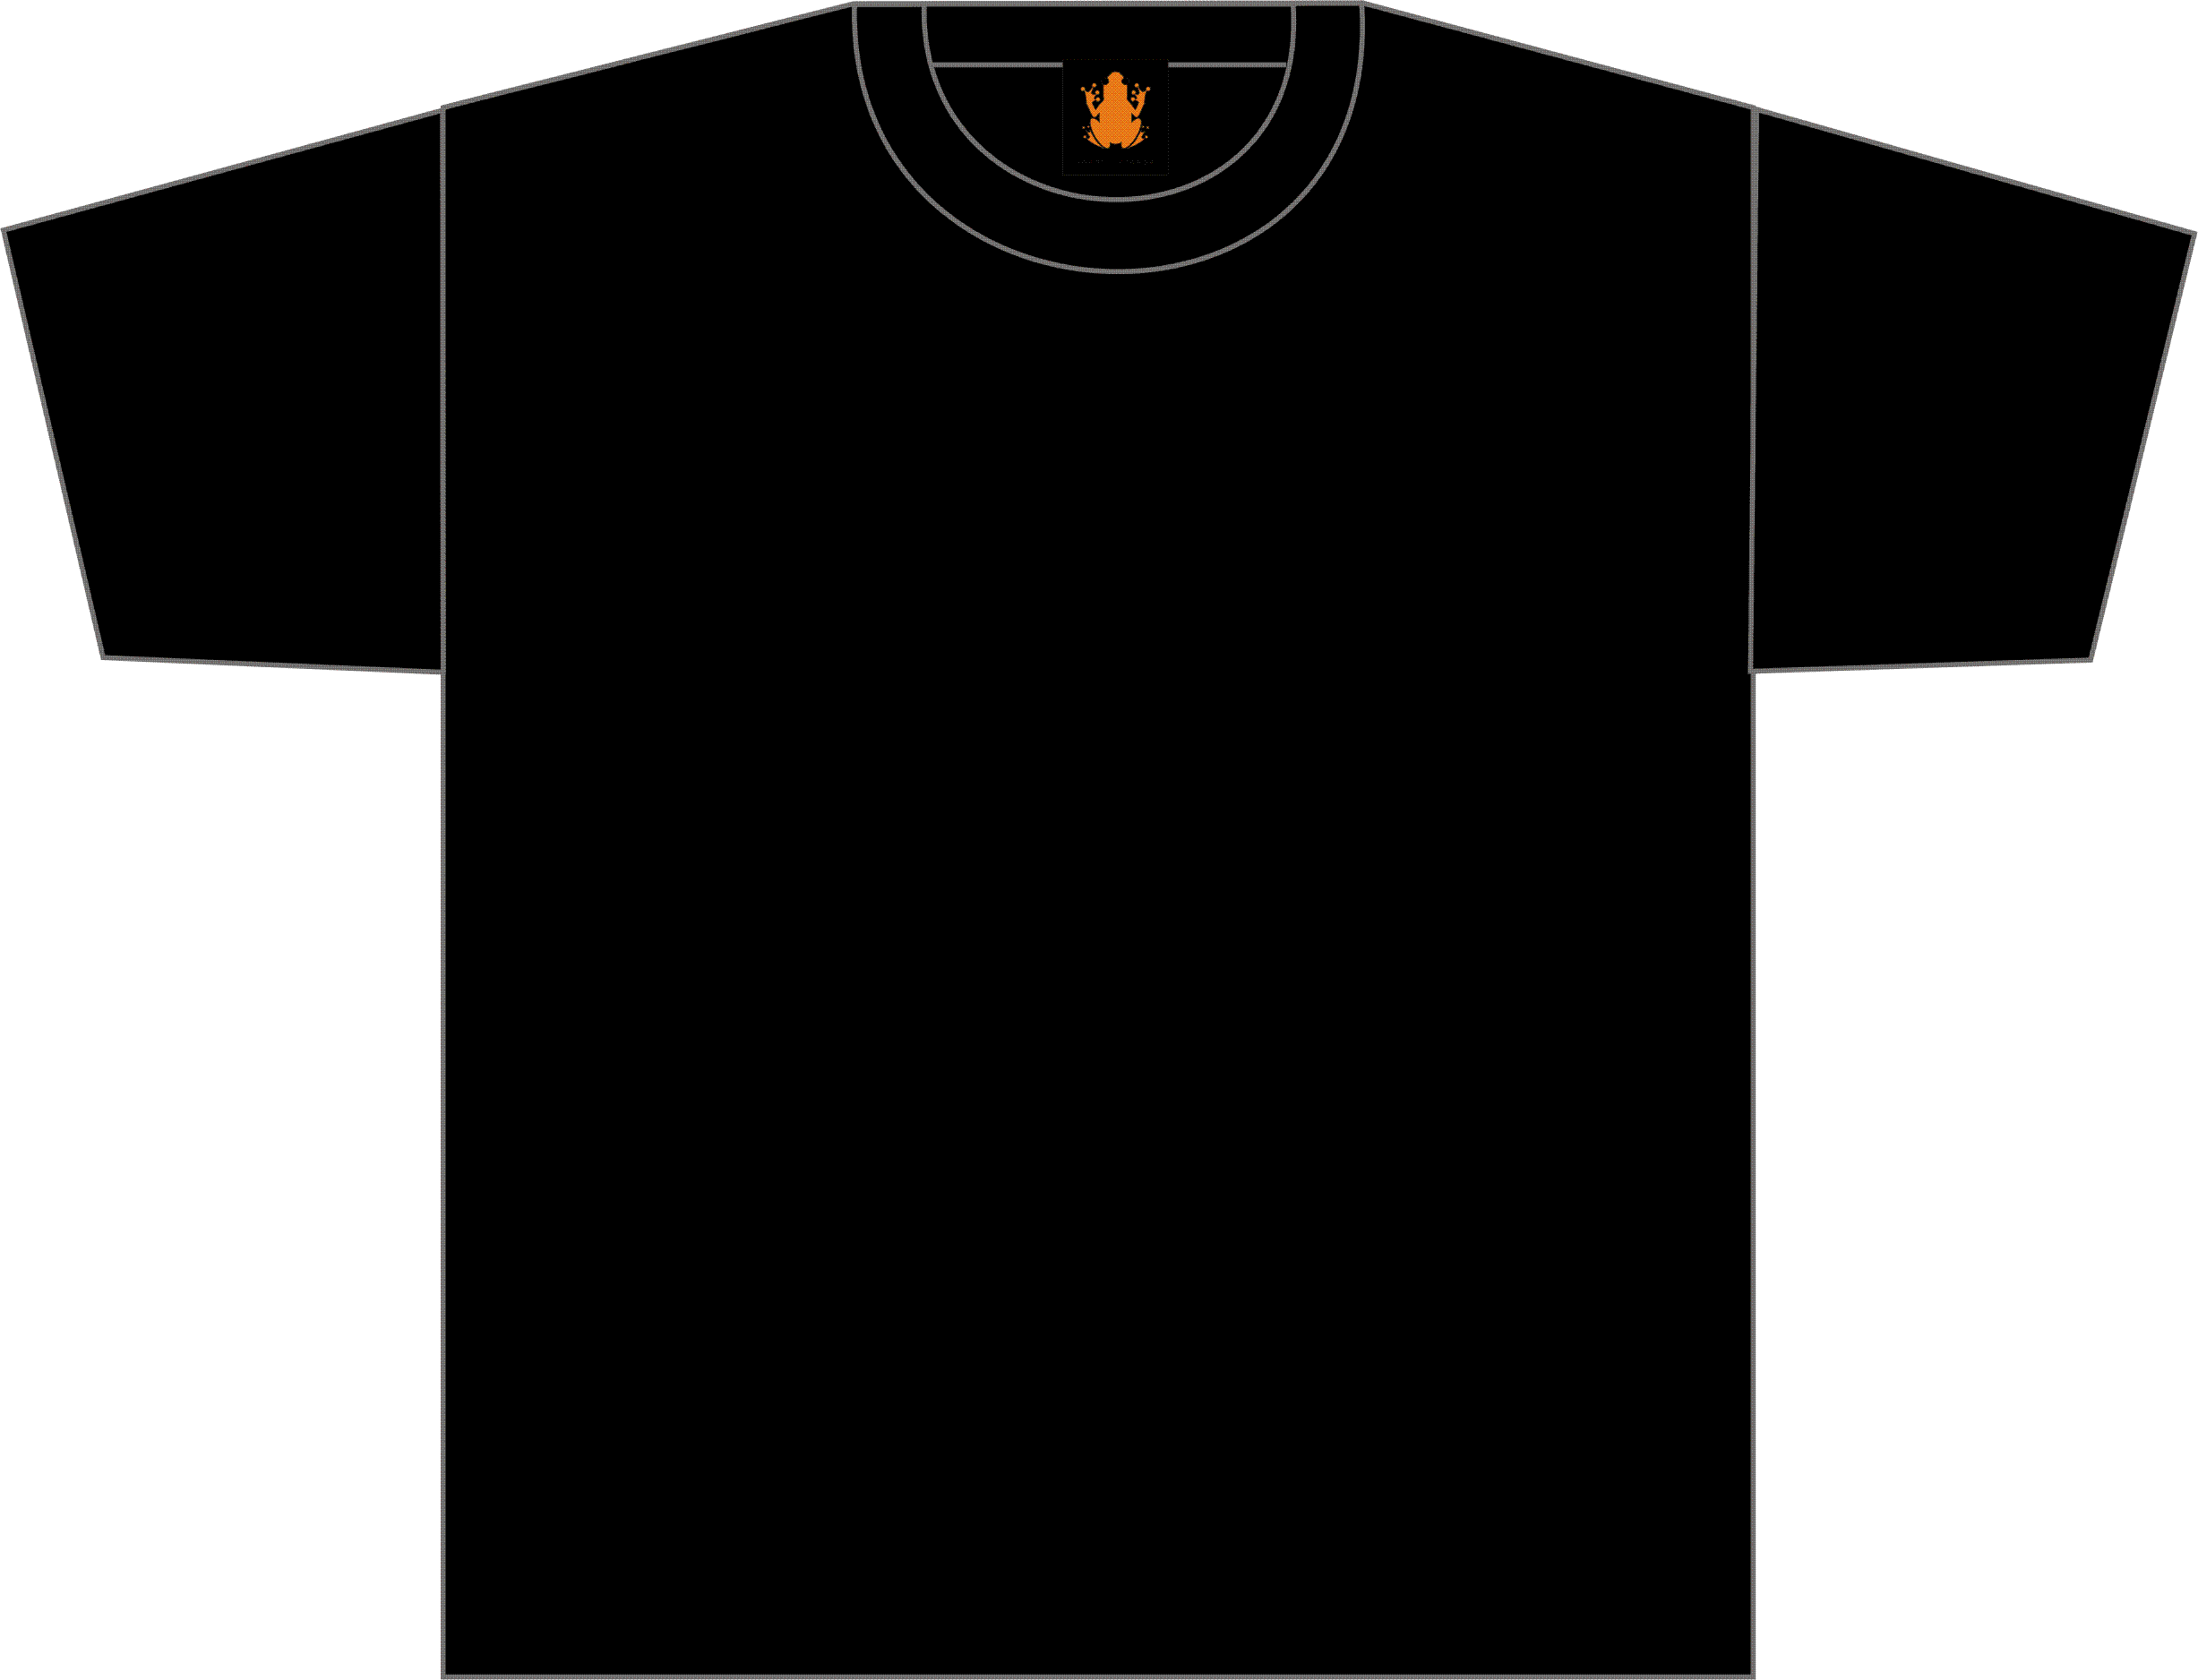 oversize-black-t-shirt-front-and-back-background-transparent-12304841-png